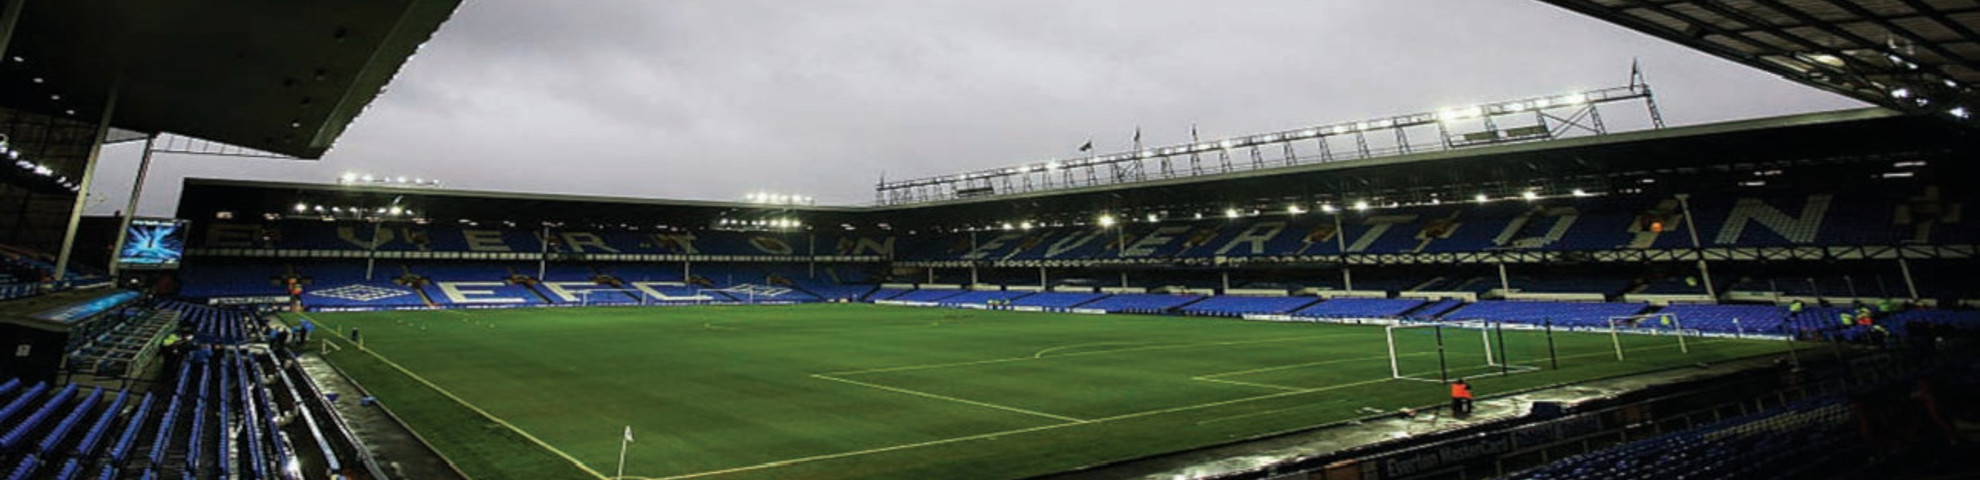 An empty football stadium with blue seats.